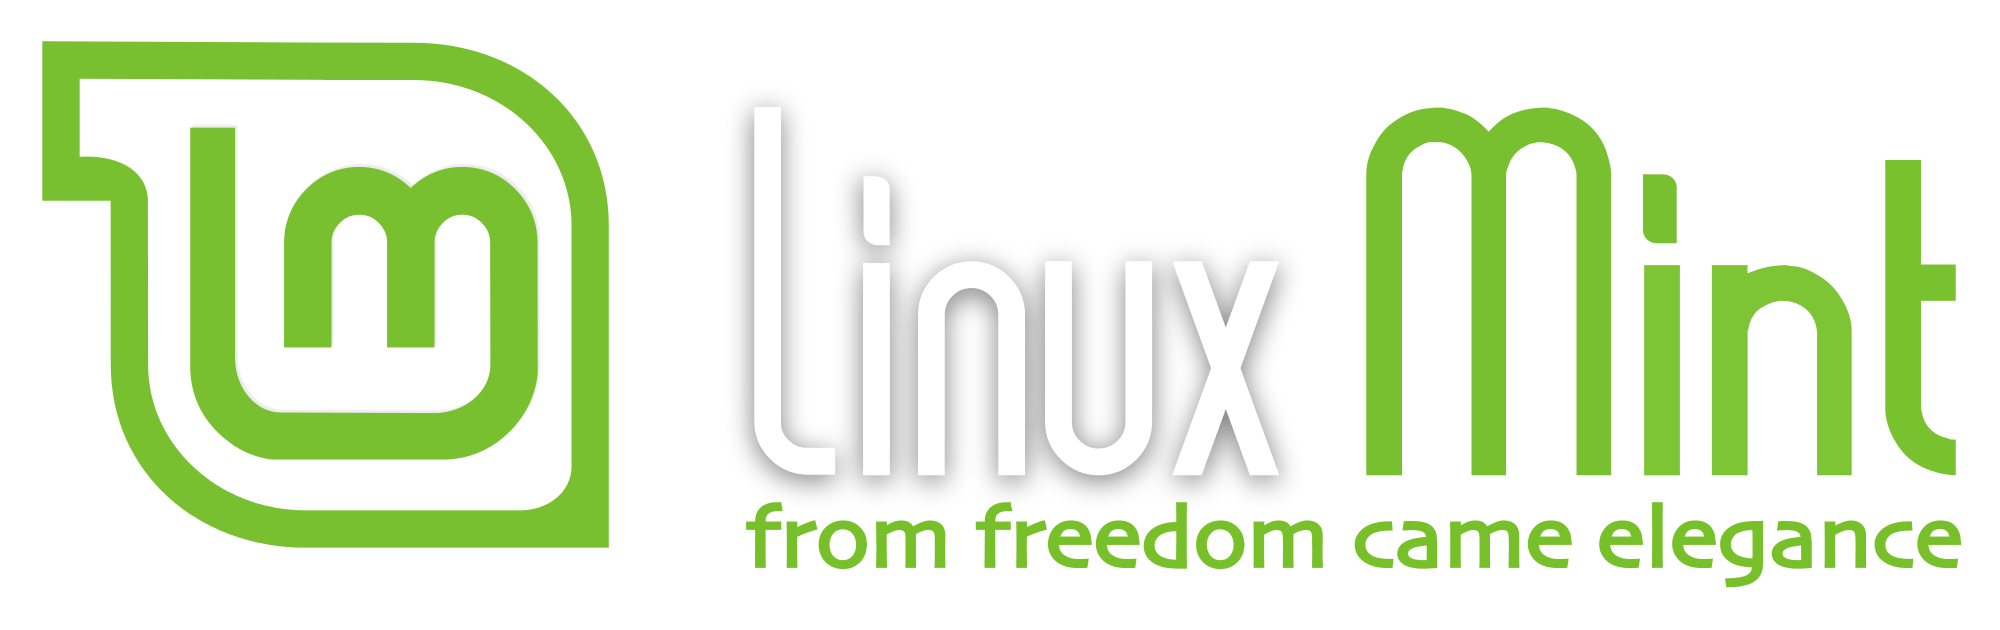 Mint Logo - Linux Mint logo submission.svg